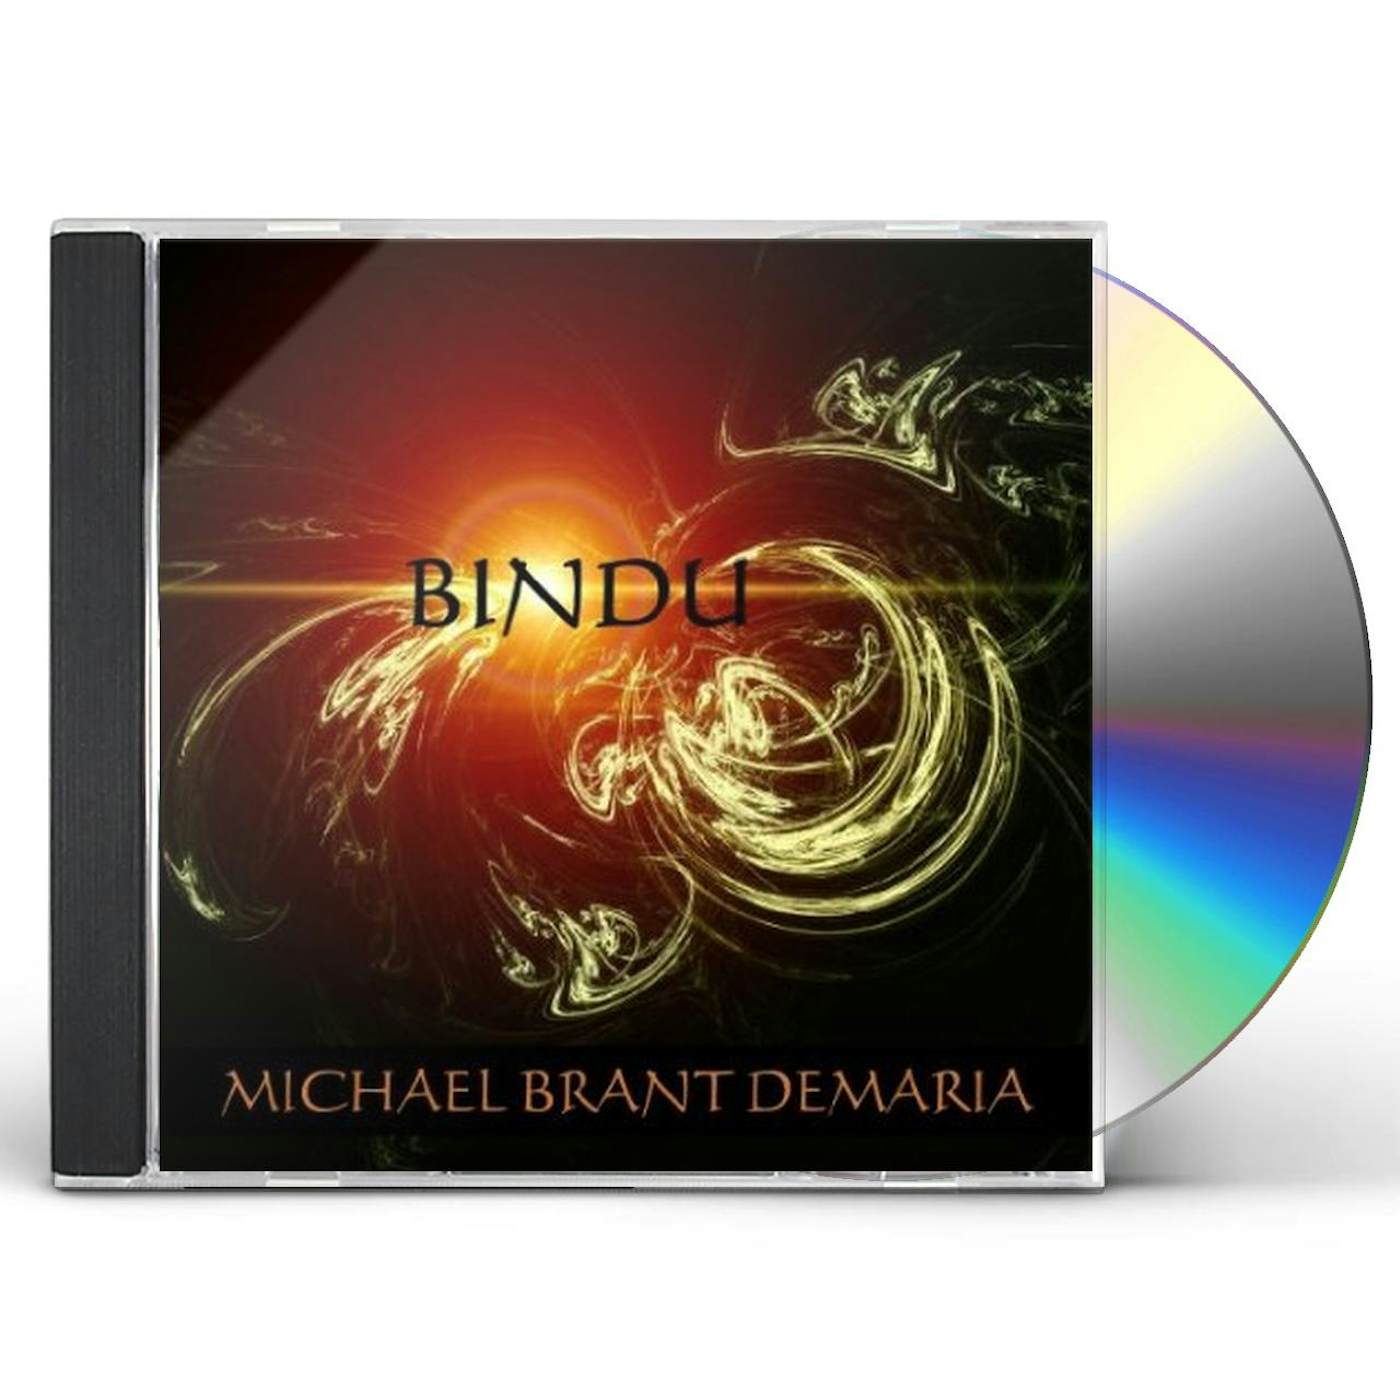 Michael Brant DeMaria BINDU CD